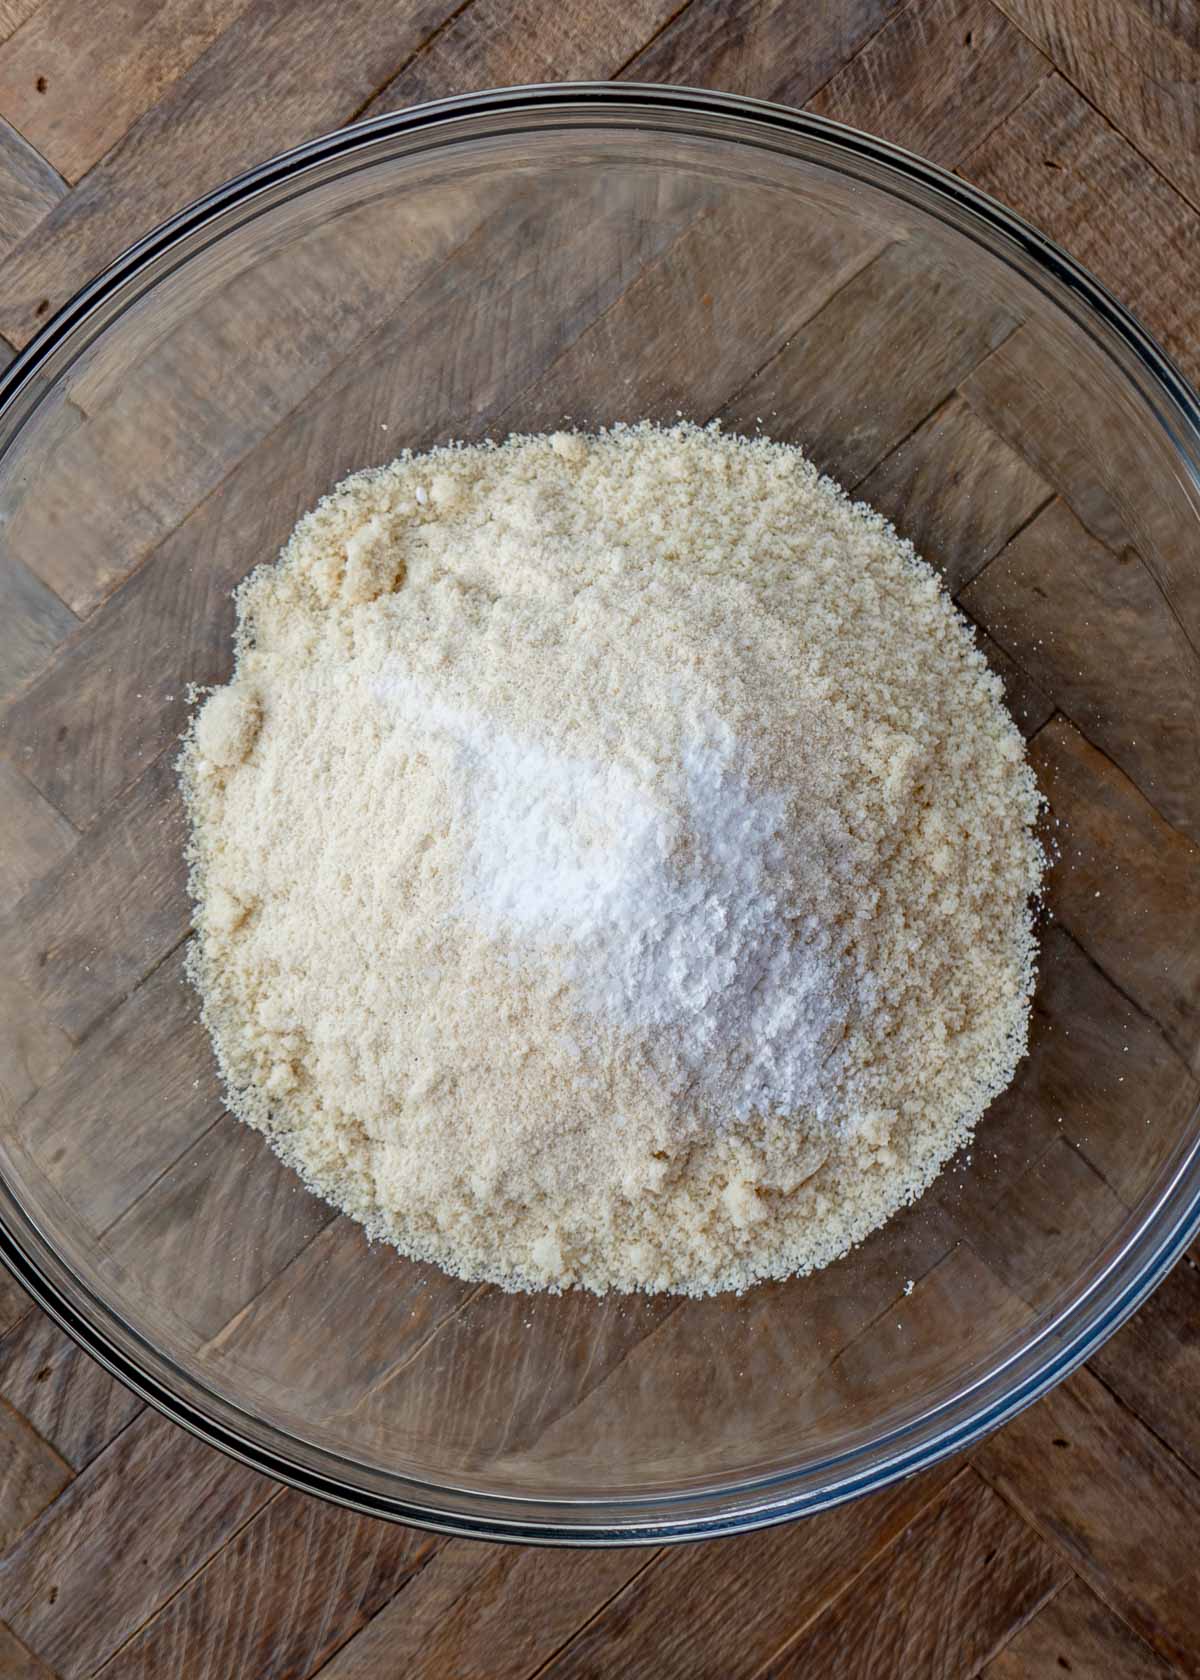 almond flour, coconut flour, baking soda, baking powder, and salt in a bowl for keto sugar cookies